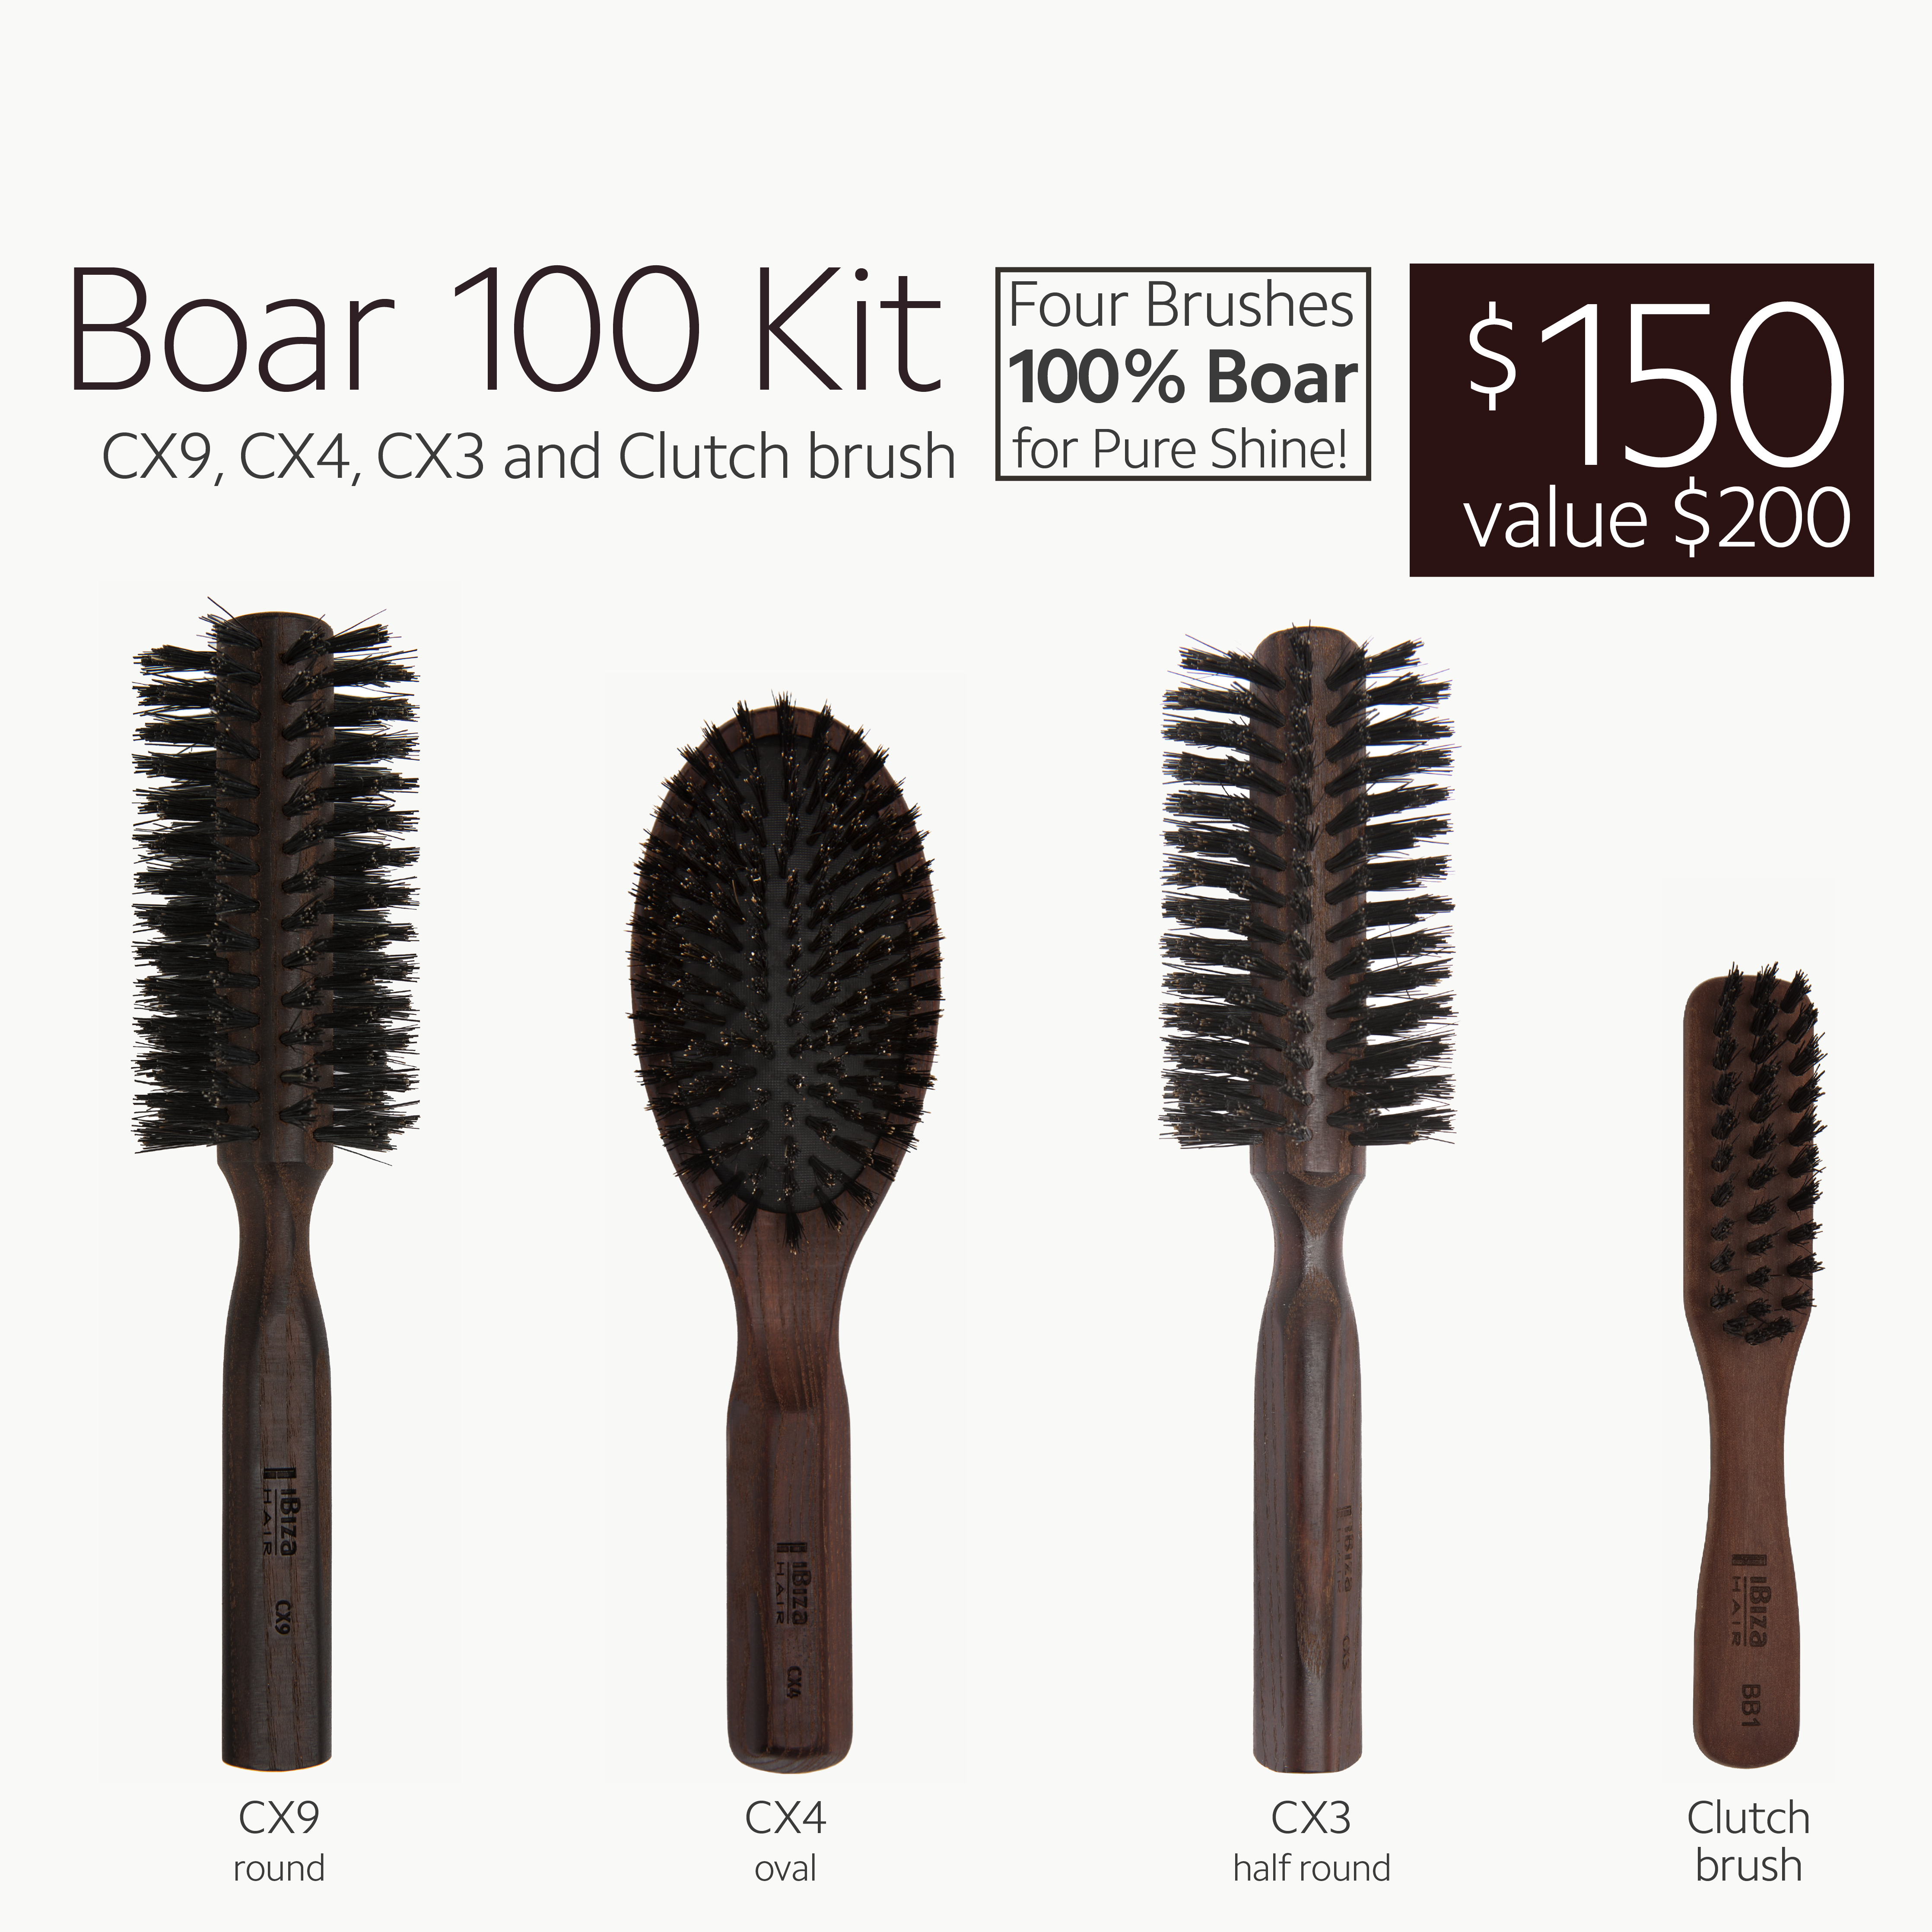 Boar 100 Kit